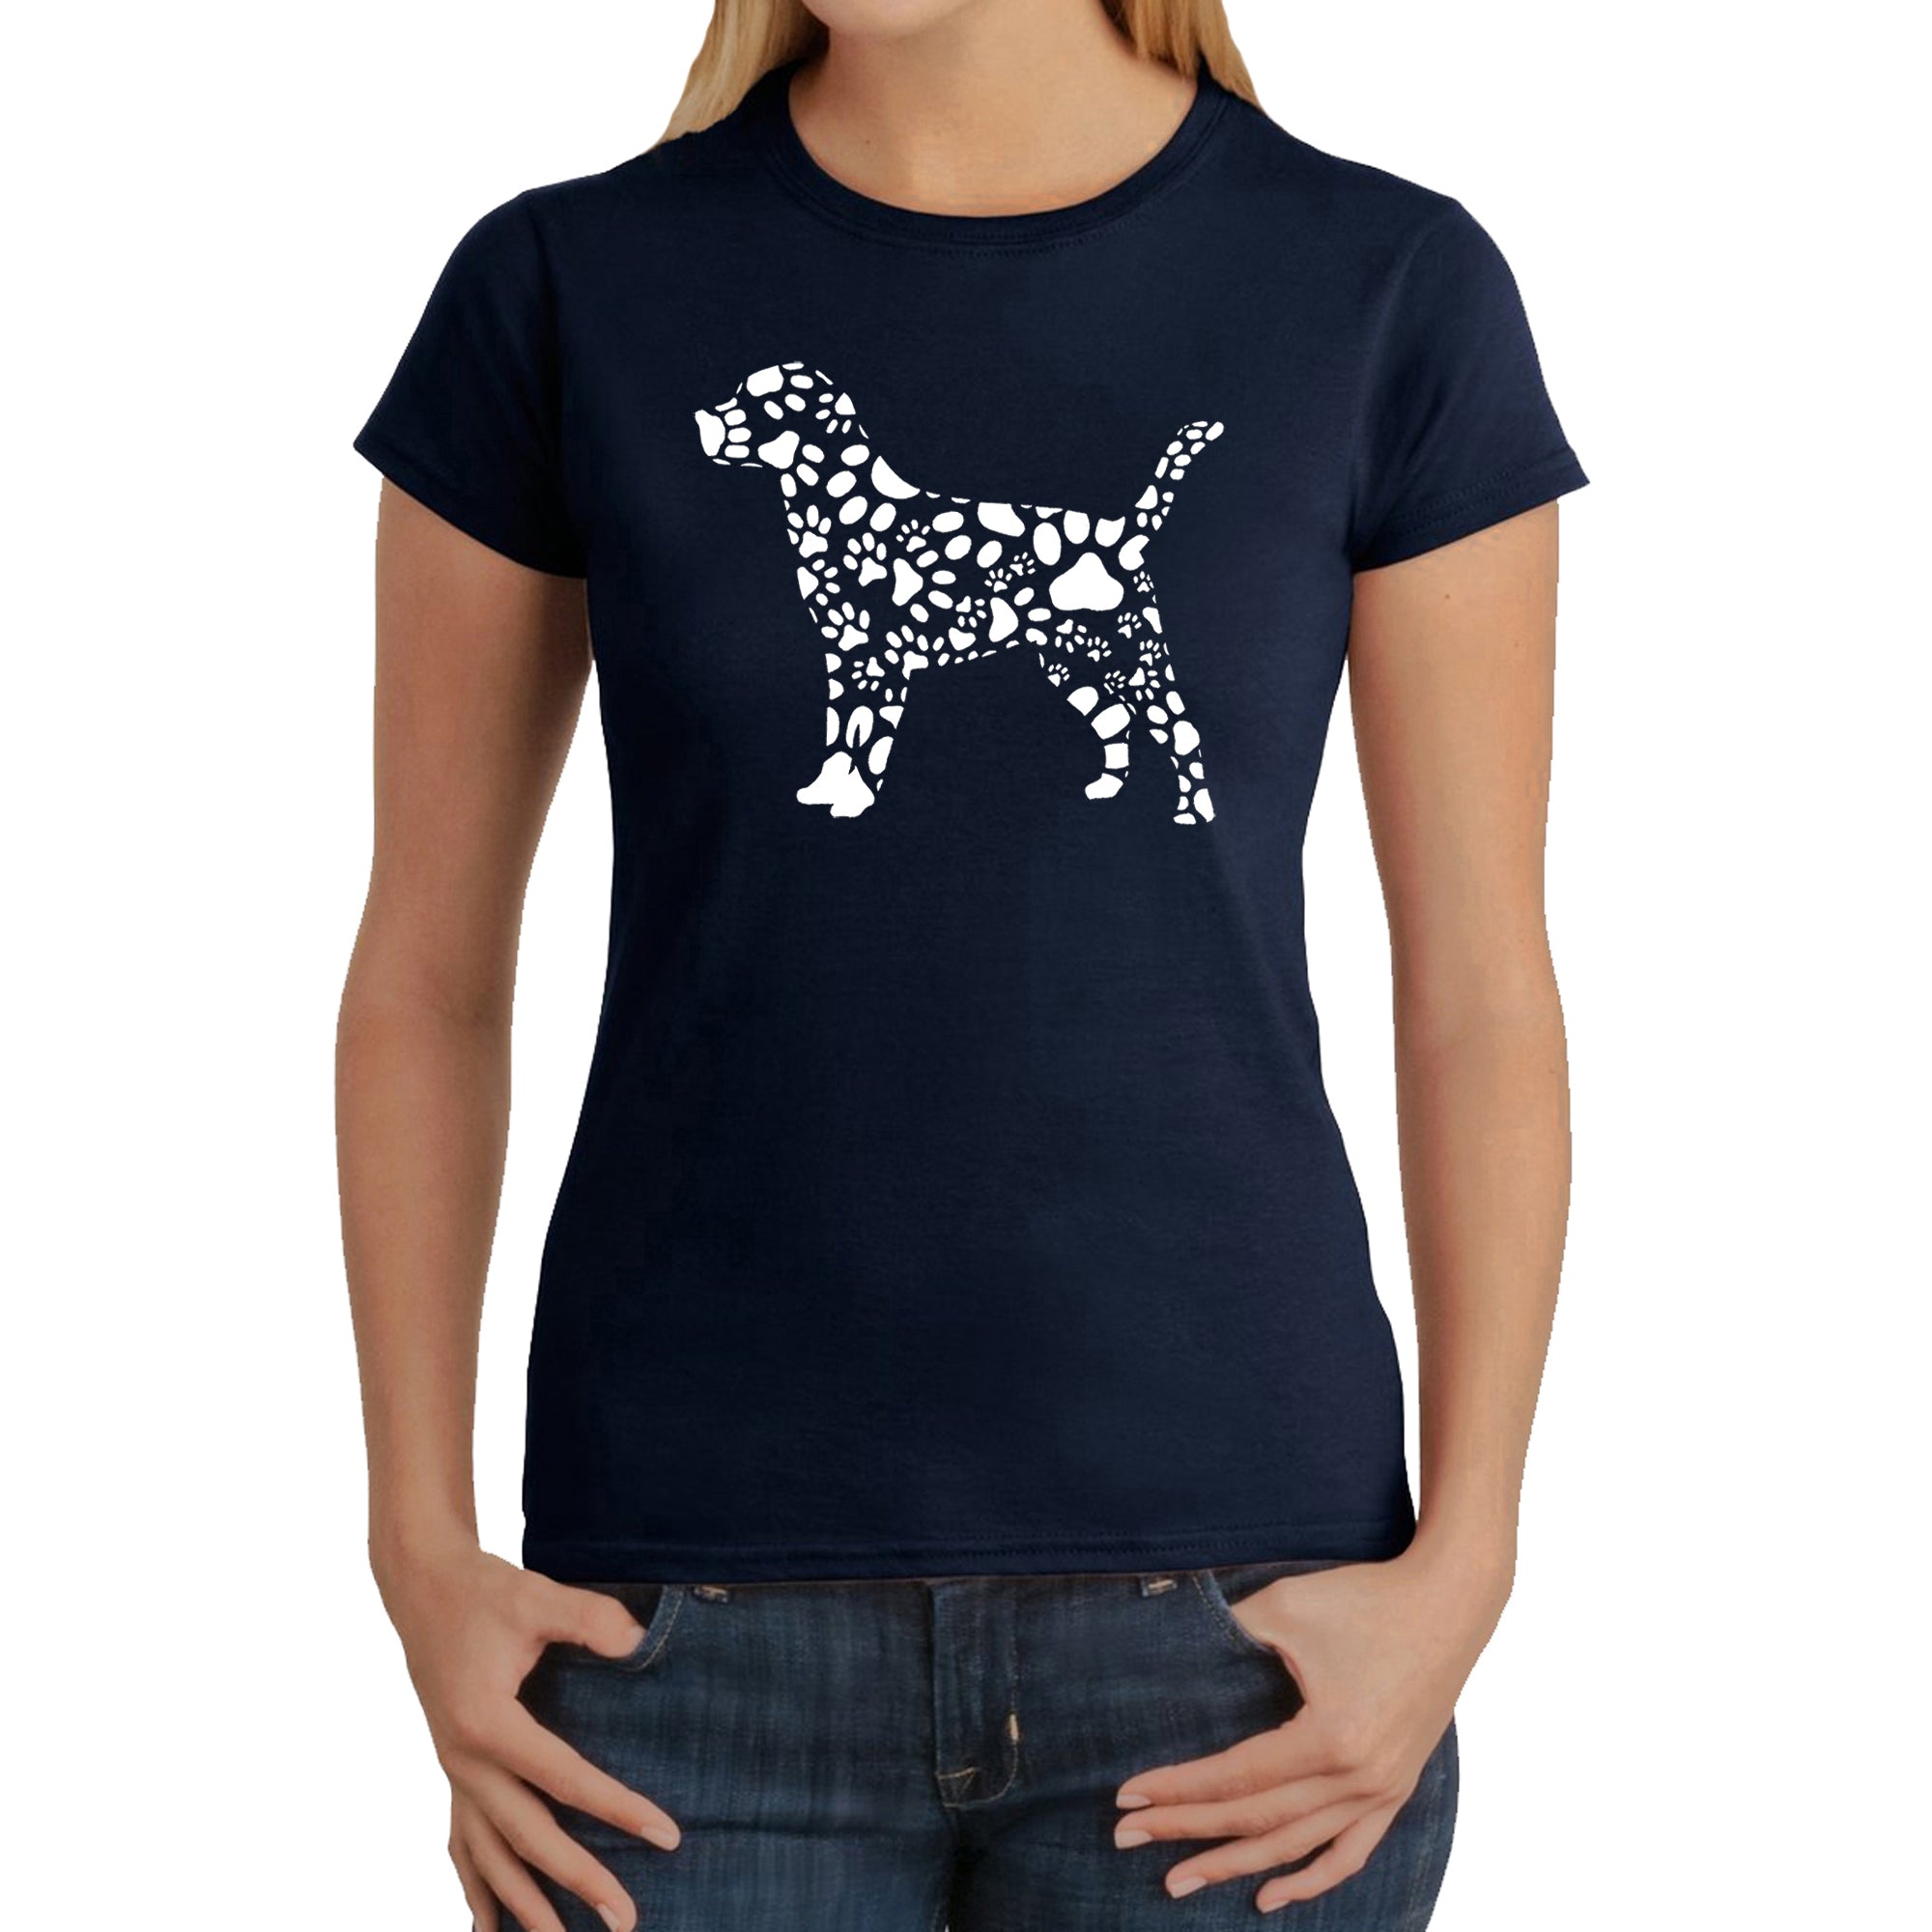 Dog Paw Prints - Women's Word Art T-Shirt - Navy - Small